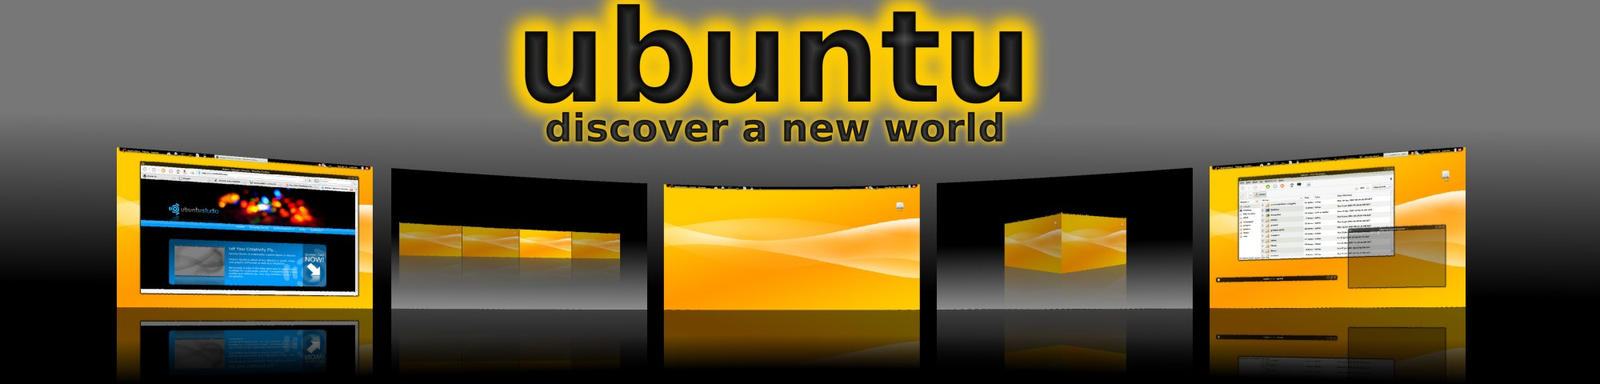 ubuntu: discover a new world